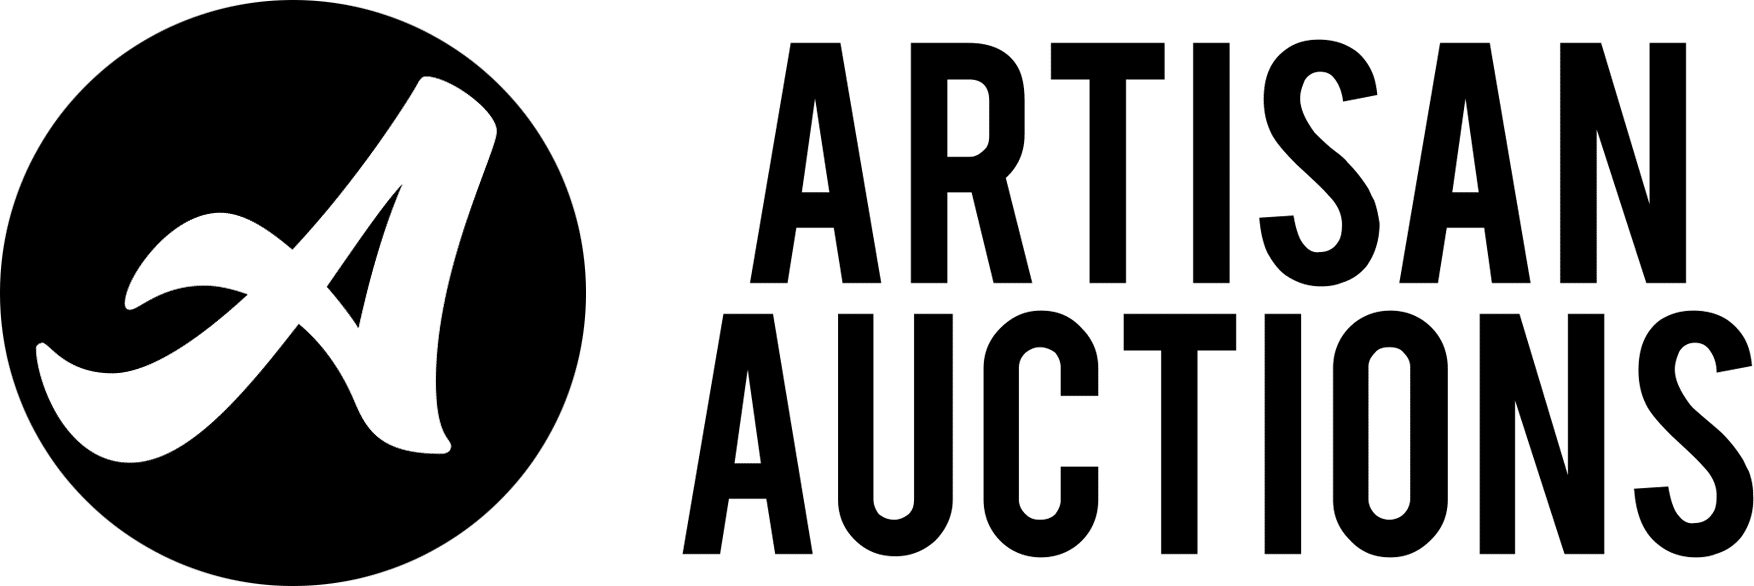 Artisan Auctions